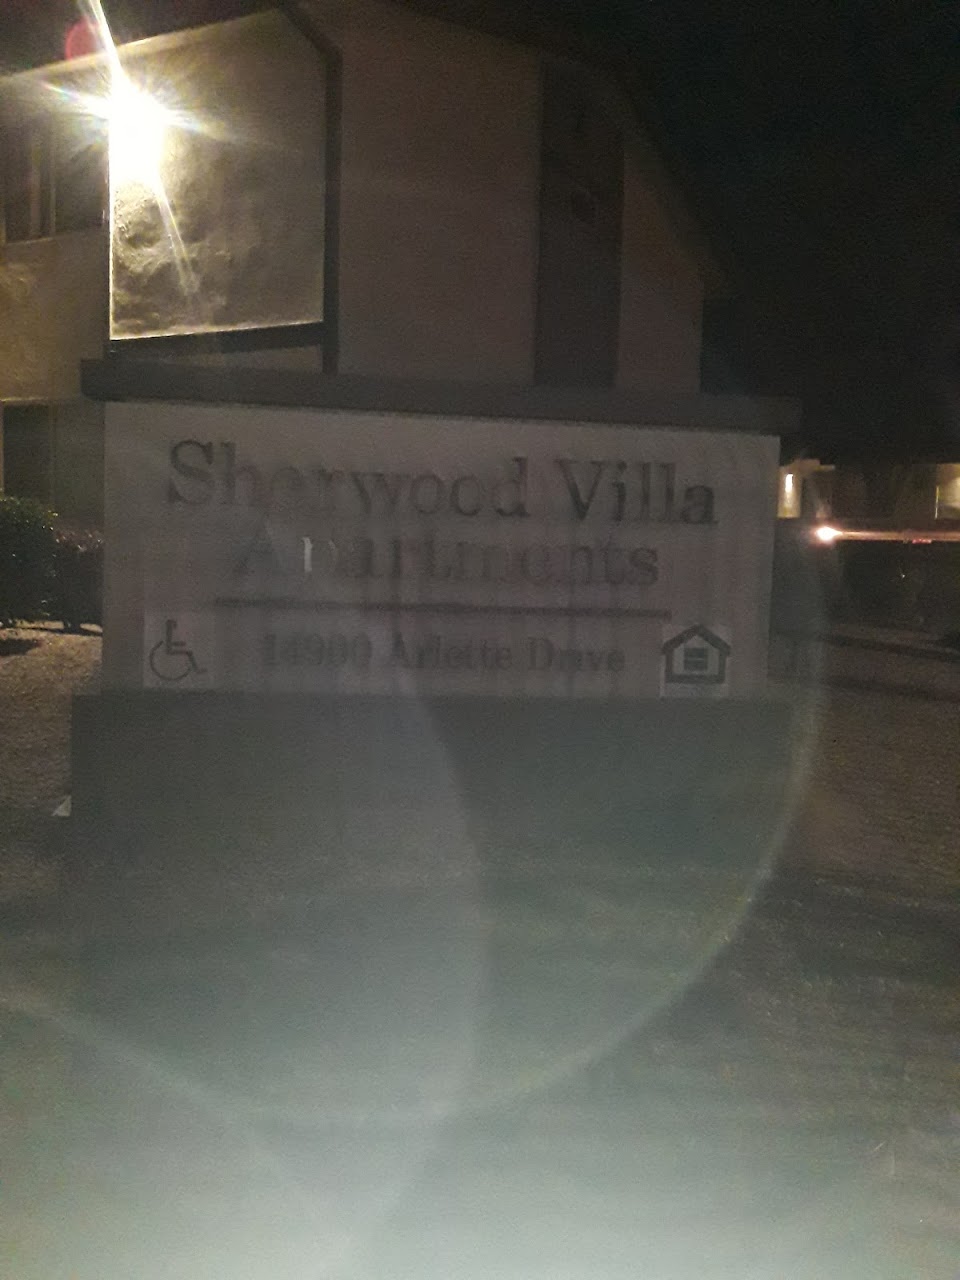 Photo of SHERWOOD VILLA at 14900 ARLETTE DRIVE VICTORVILLE, CA 92394